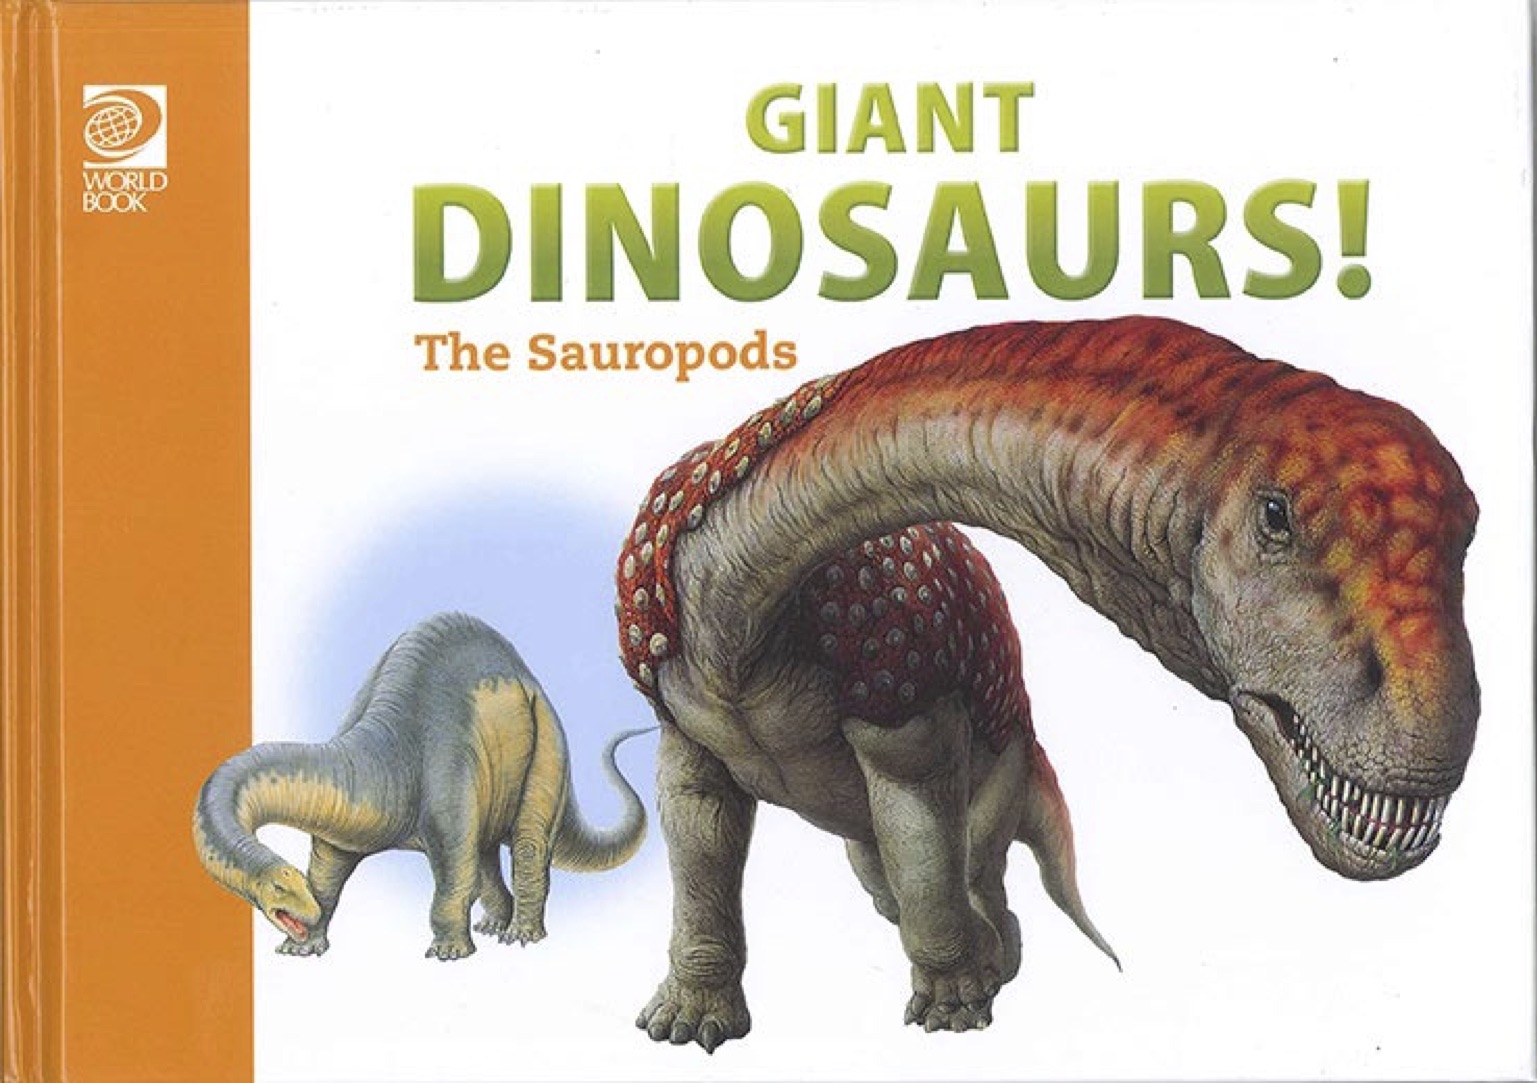 Dinosaurs! Giant Dinosaurs!